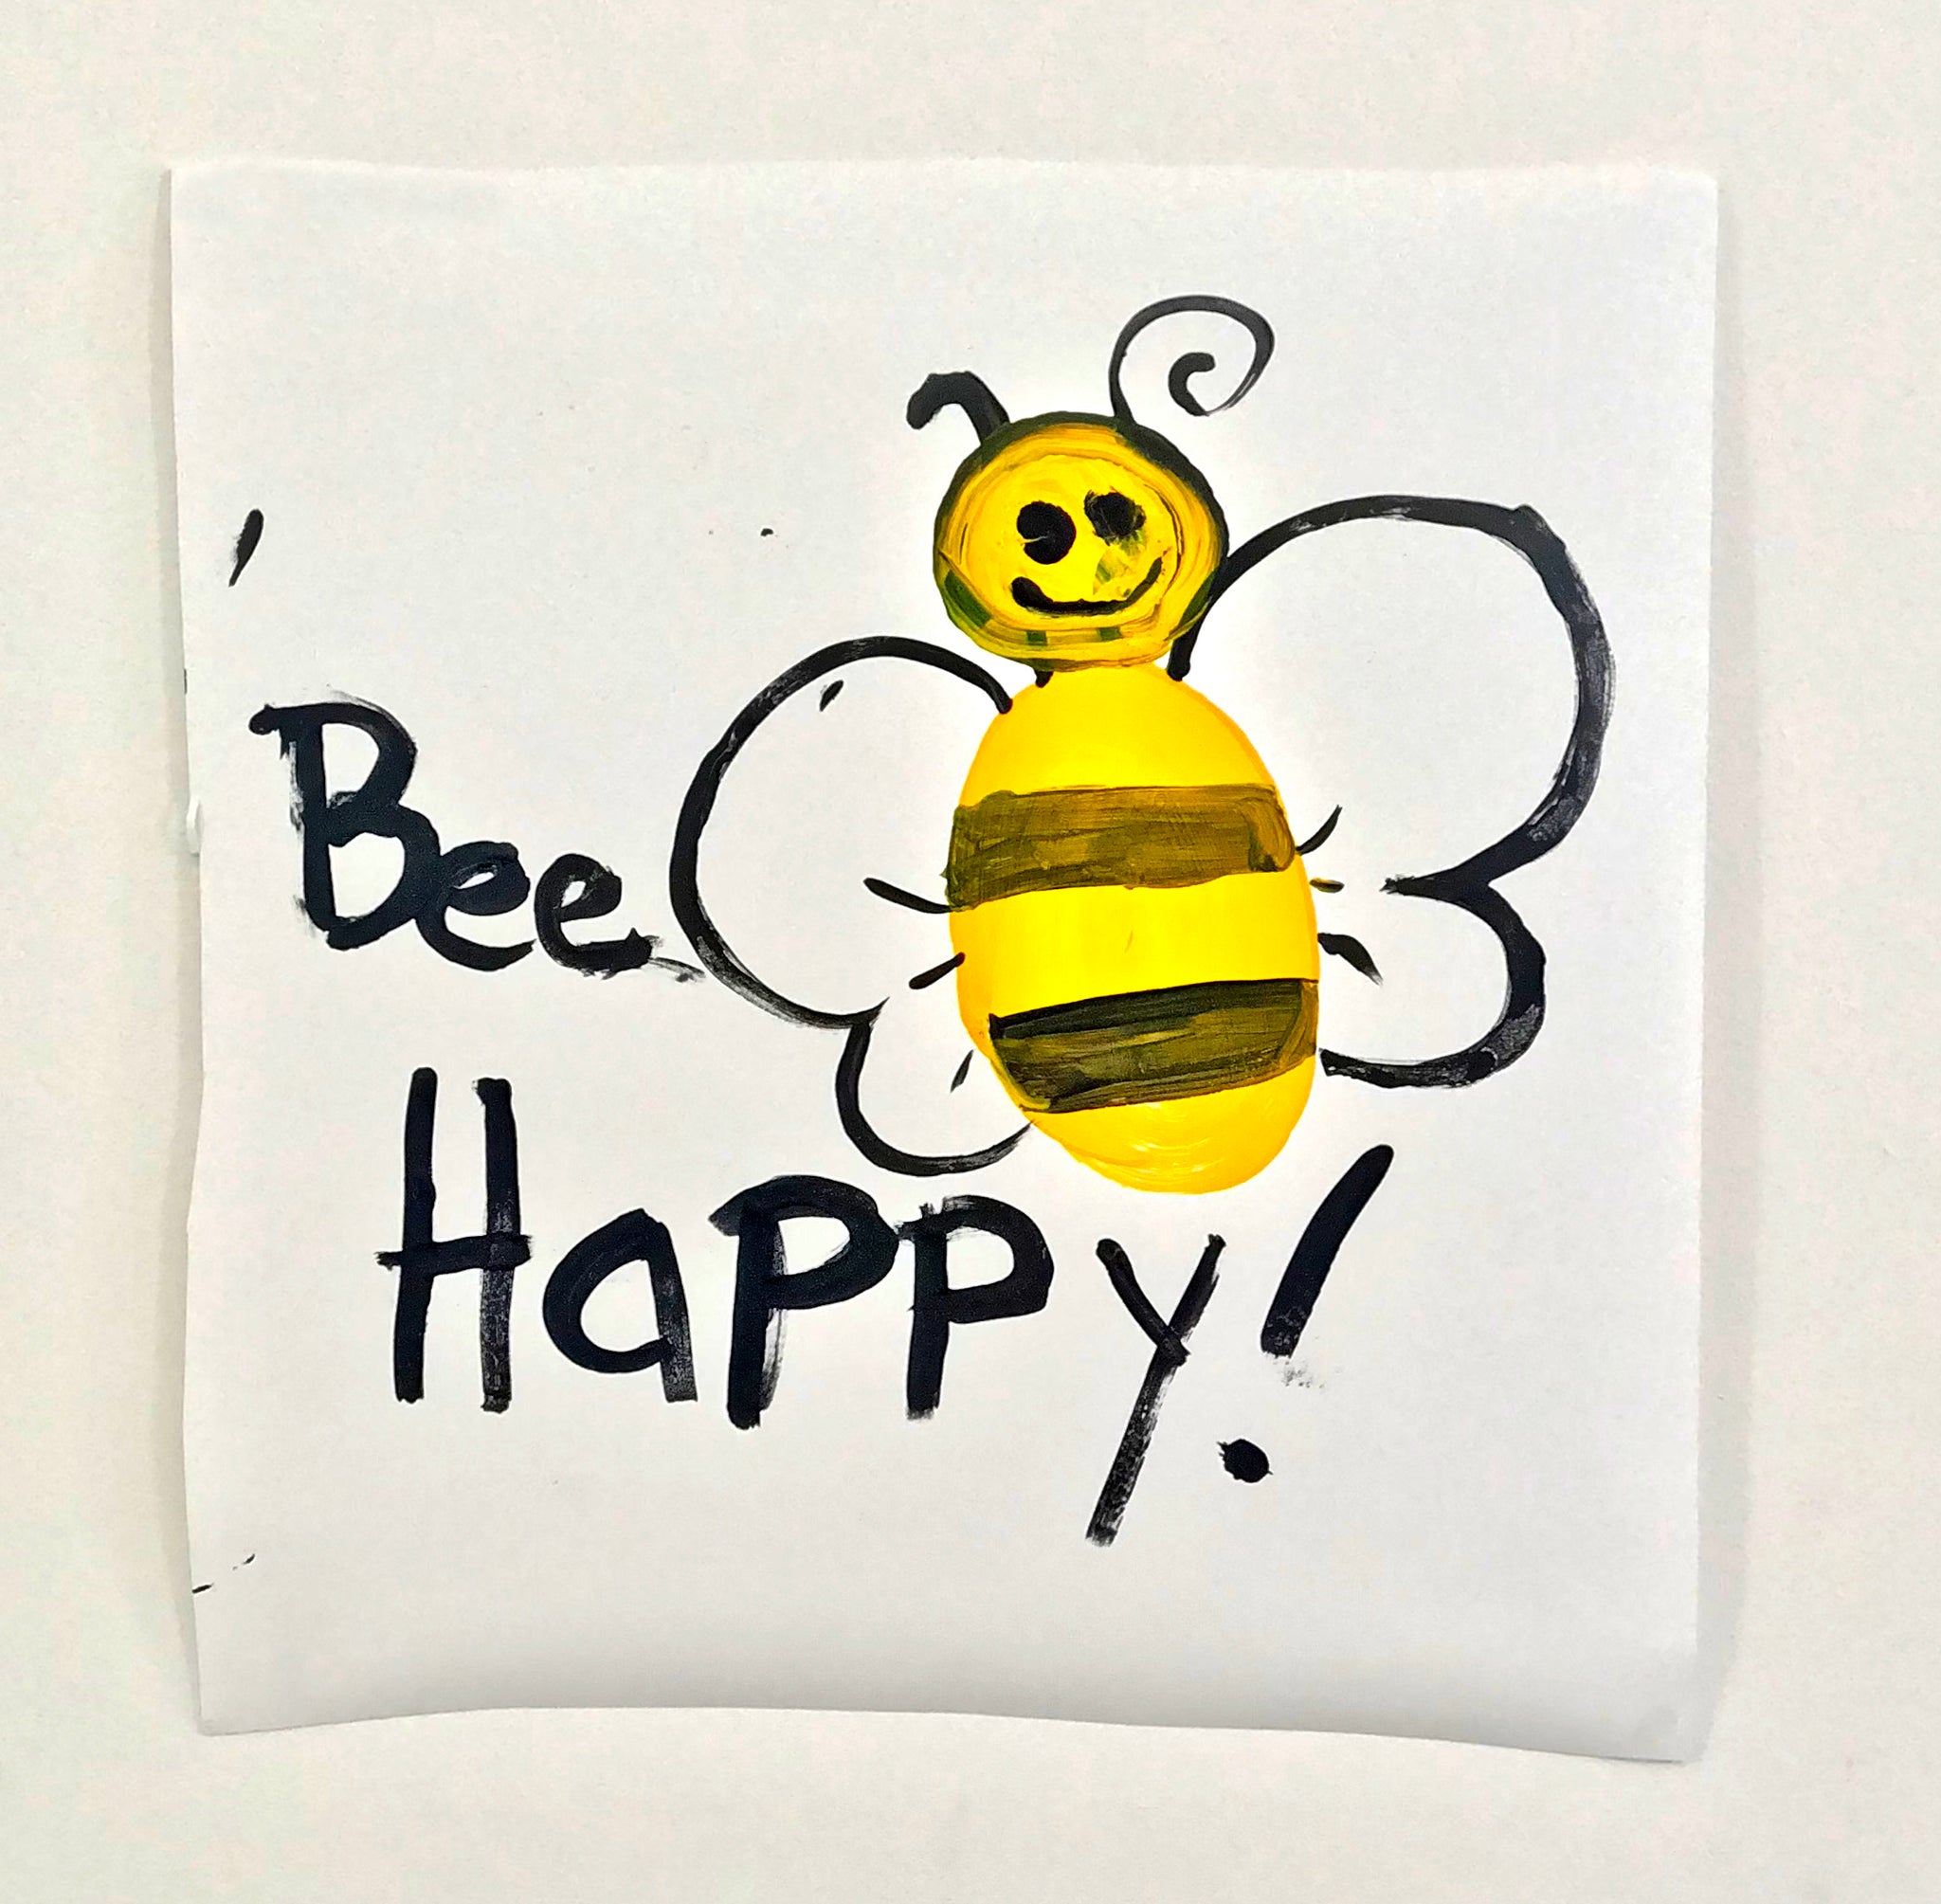 Alison Woods, "Bee Happy"